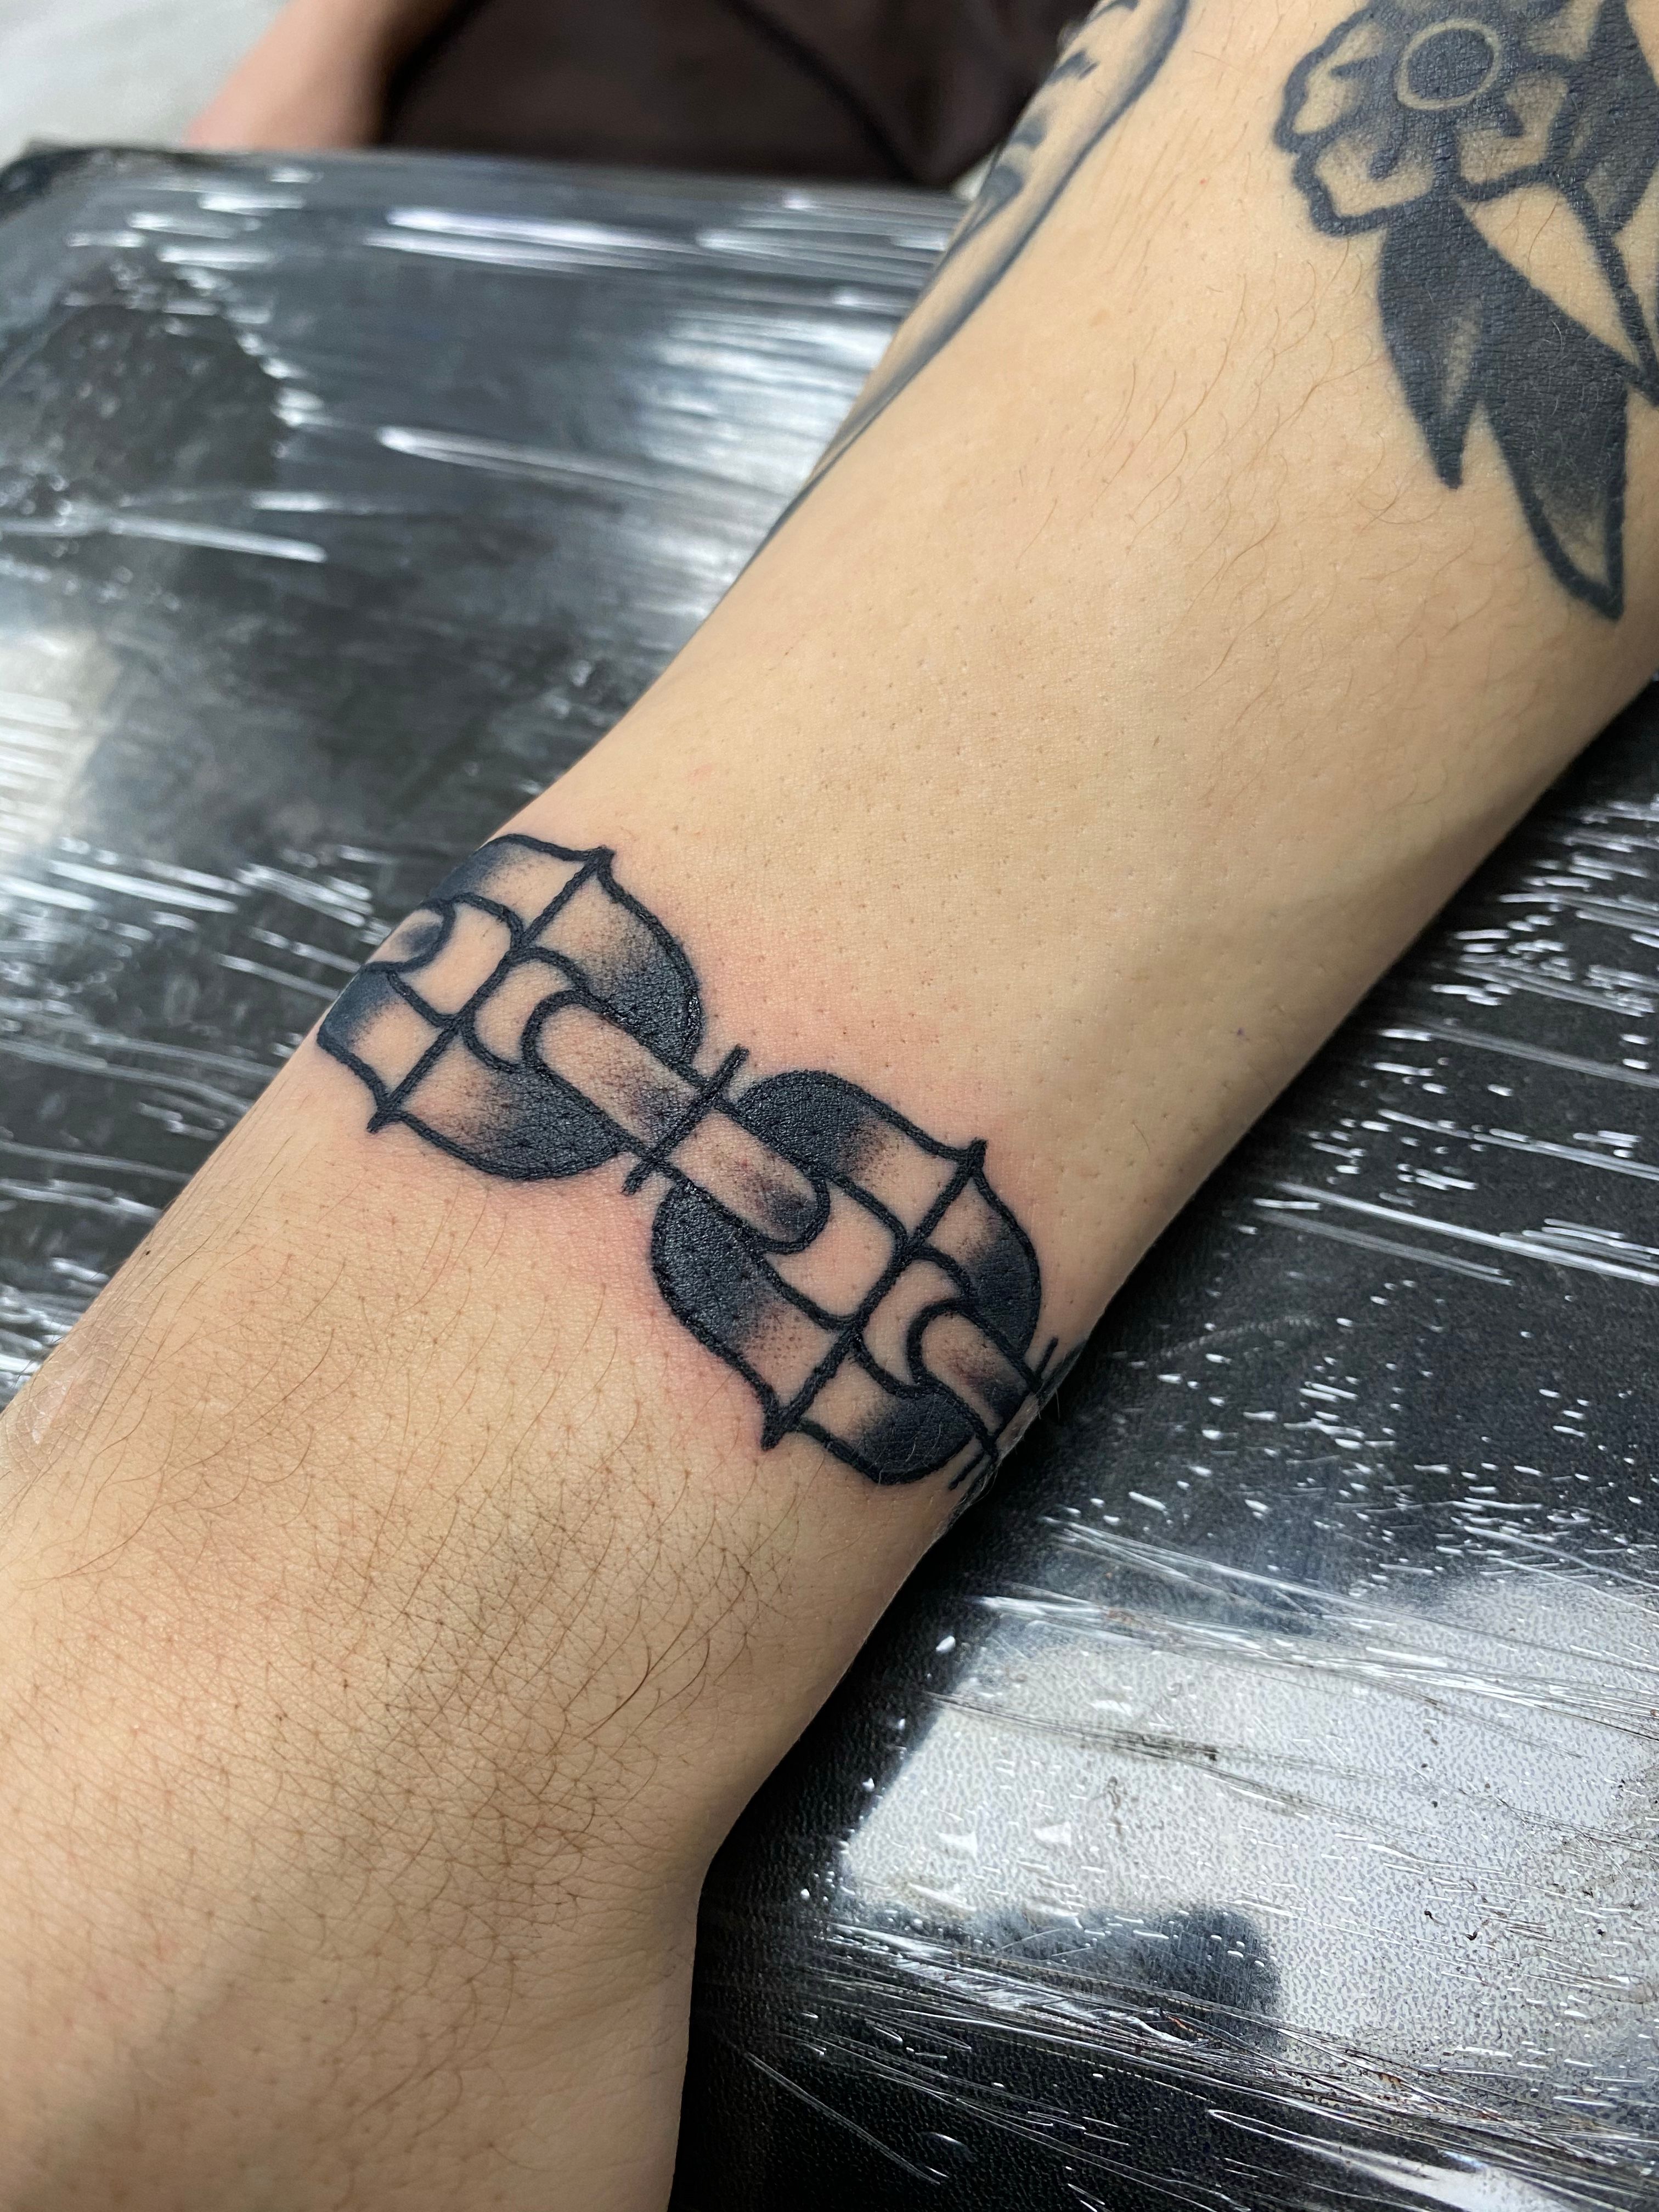 Wrist band tattoo 🐇 - Black Shade Tattoos | Facebook